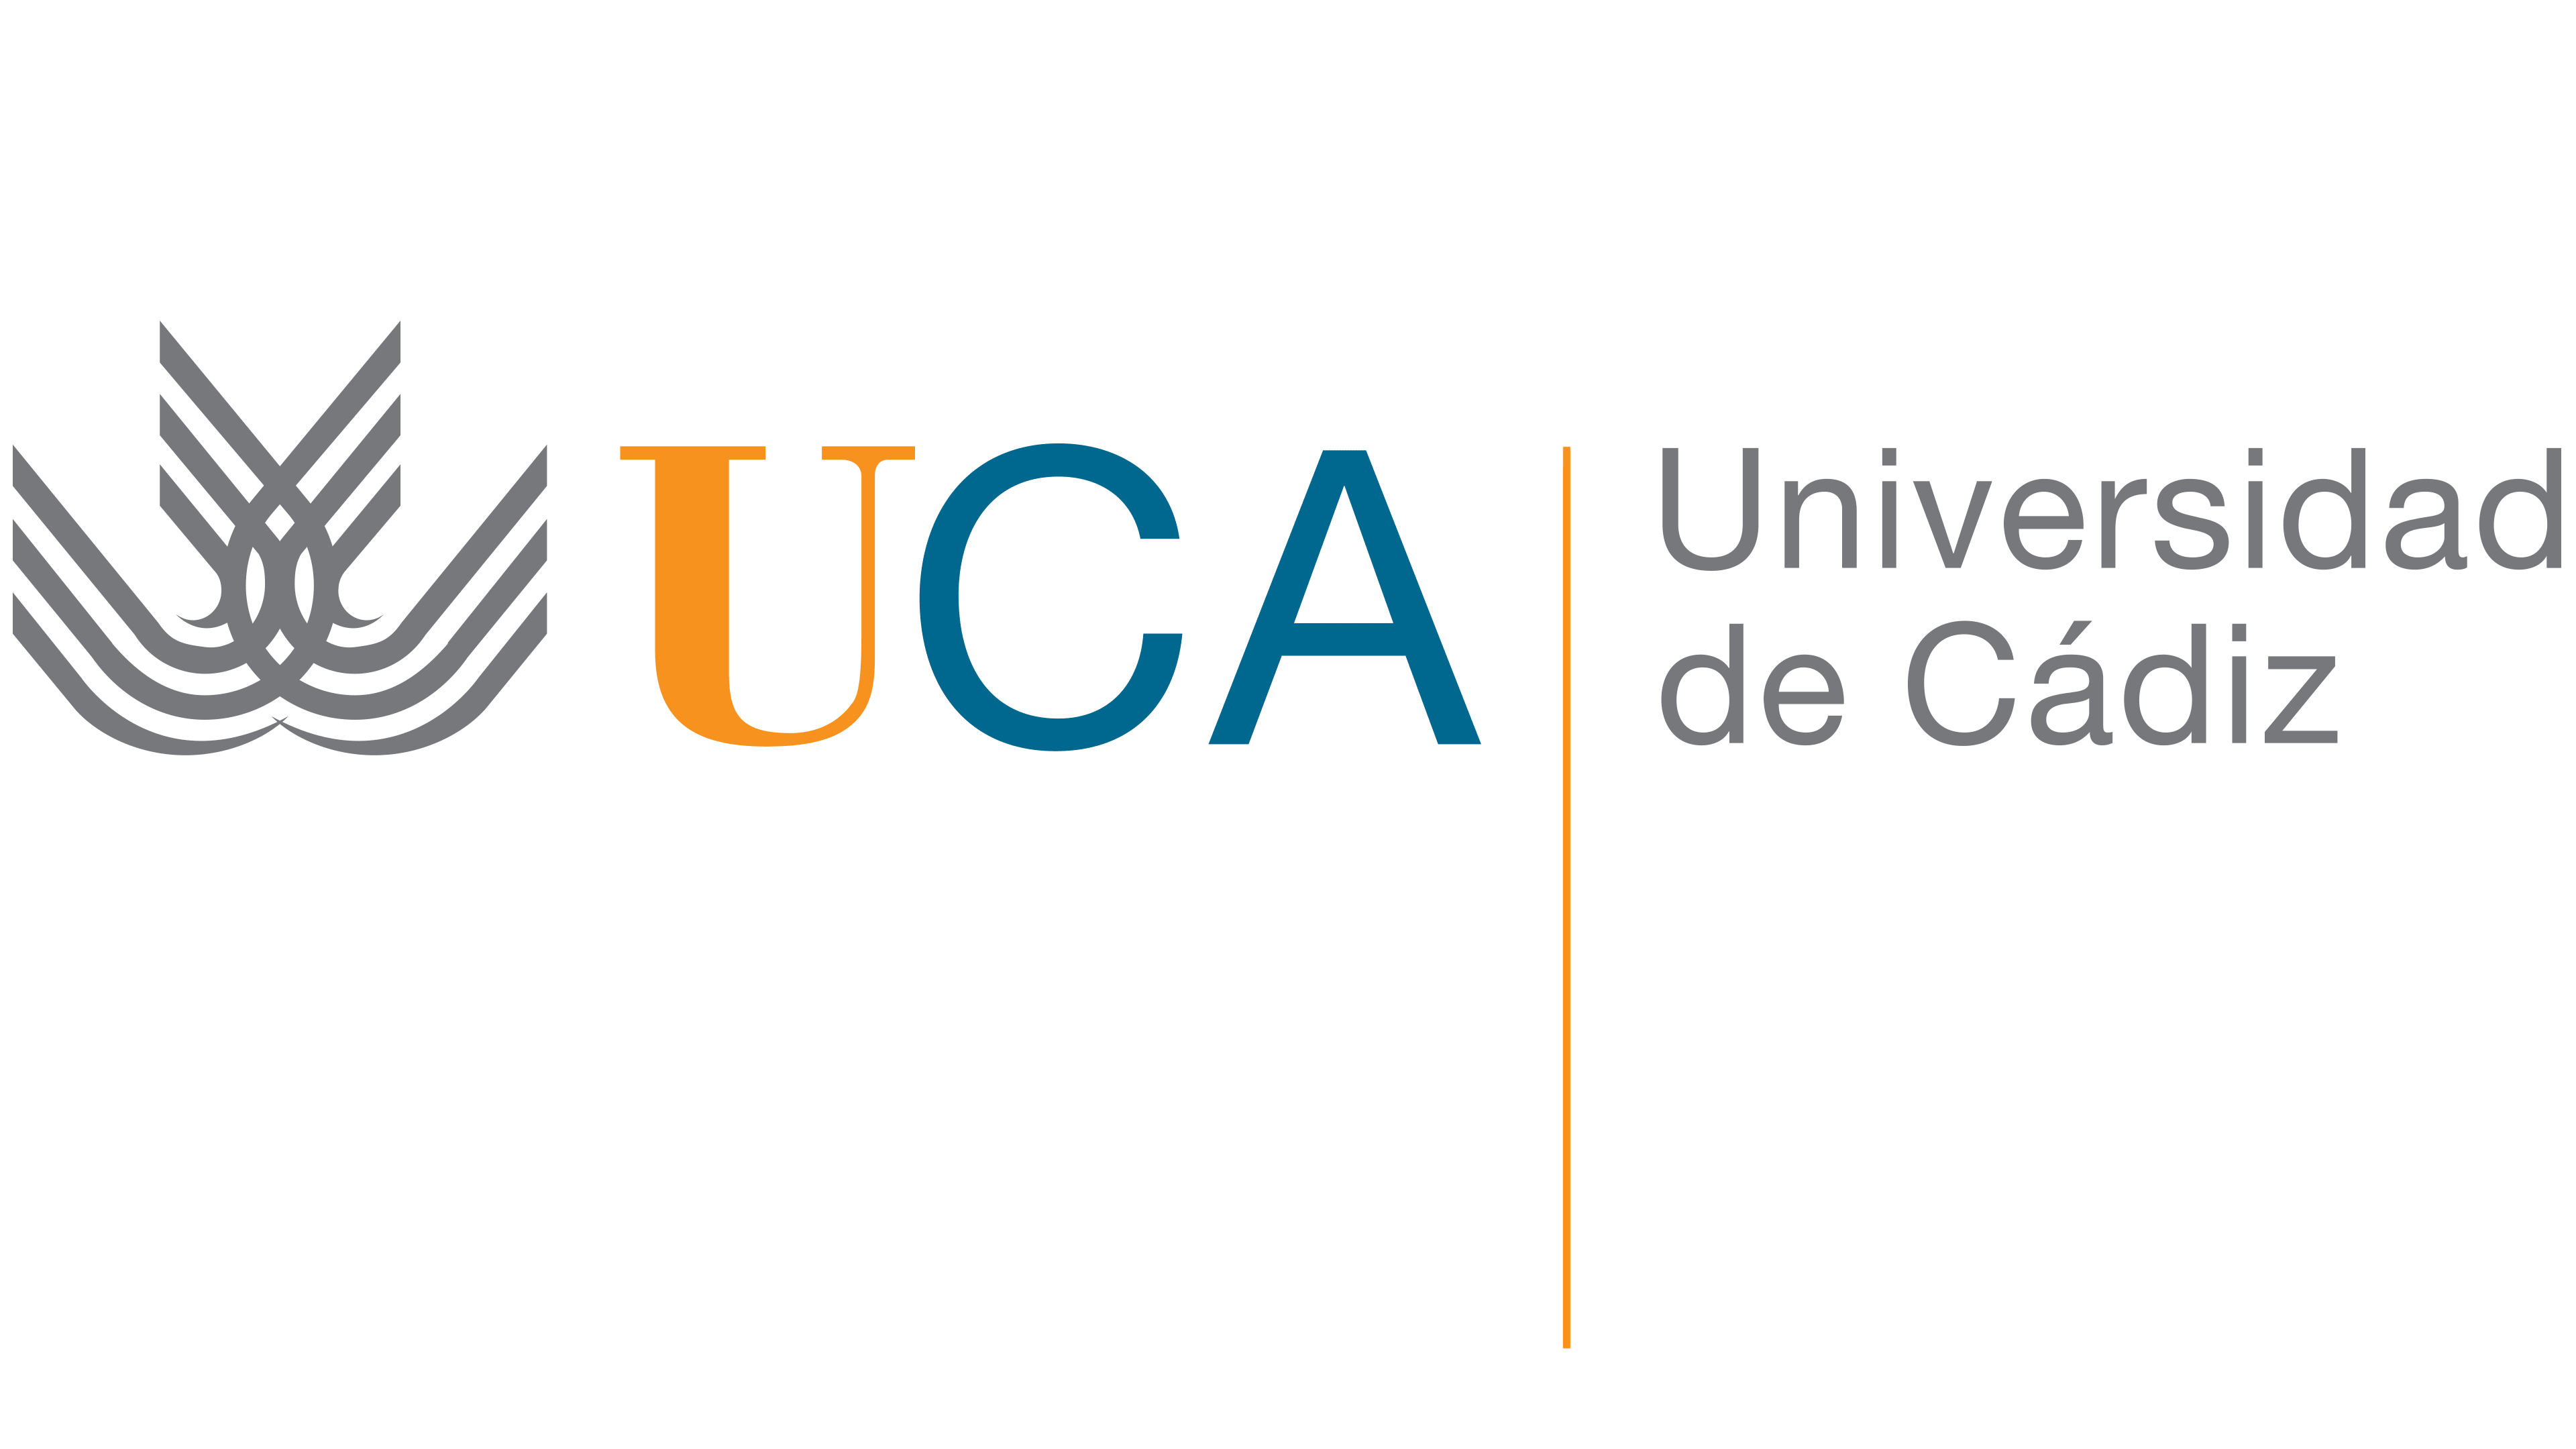 University of Cadiz (ES)